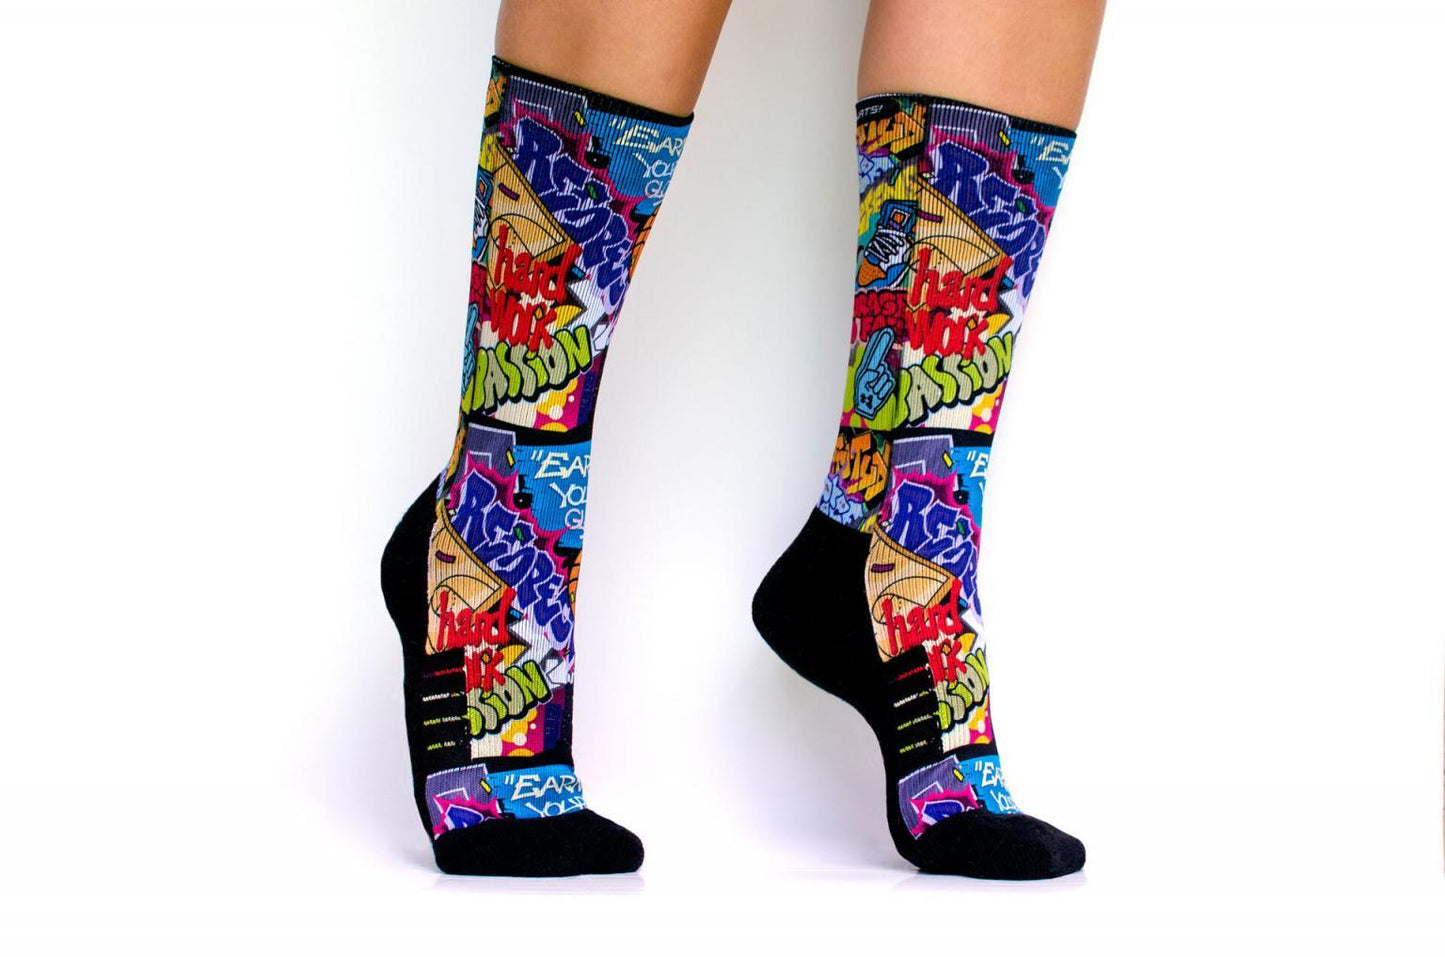 Graffiti Socks Variety 3 Pack - Buy 3 and Save!